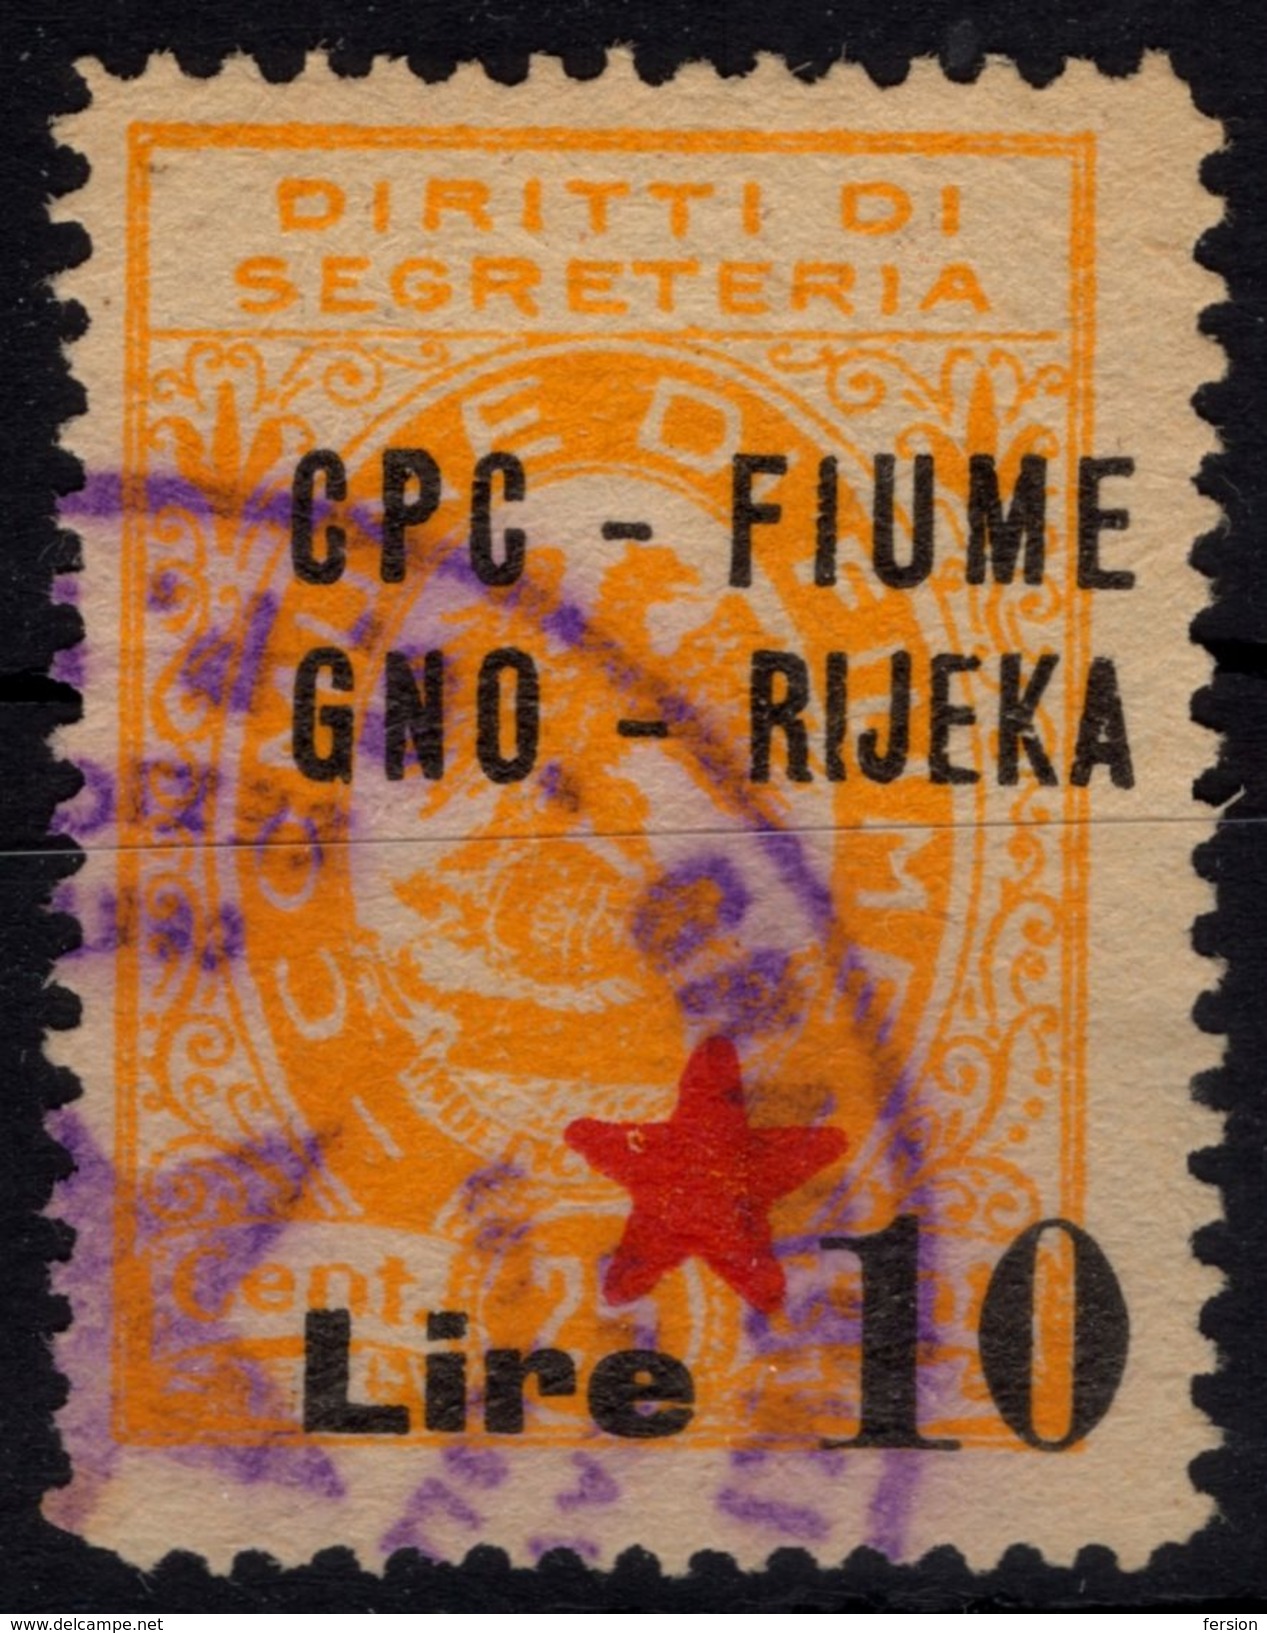 1945 - Istria Istra / Rijeka Fiume - Yugoslavia Occupation - Revenue Stamp - Overprint - Used CROATIA - Occup. Iugoslava: Fiume